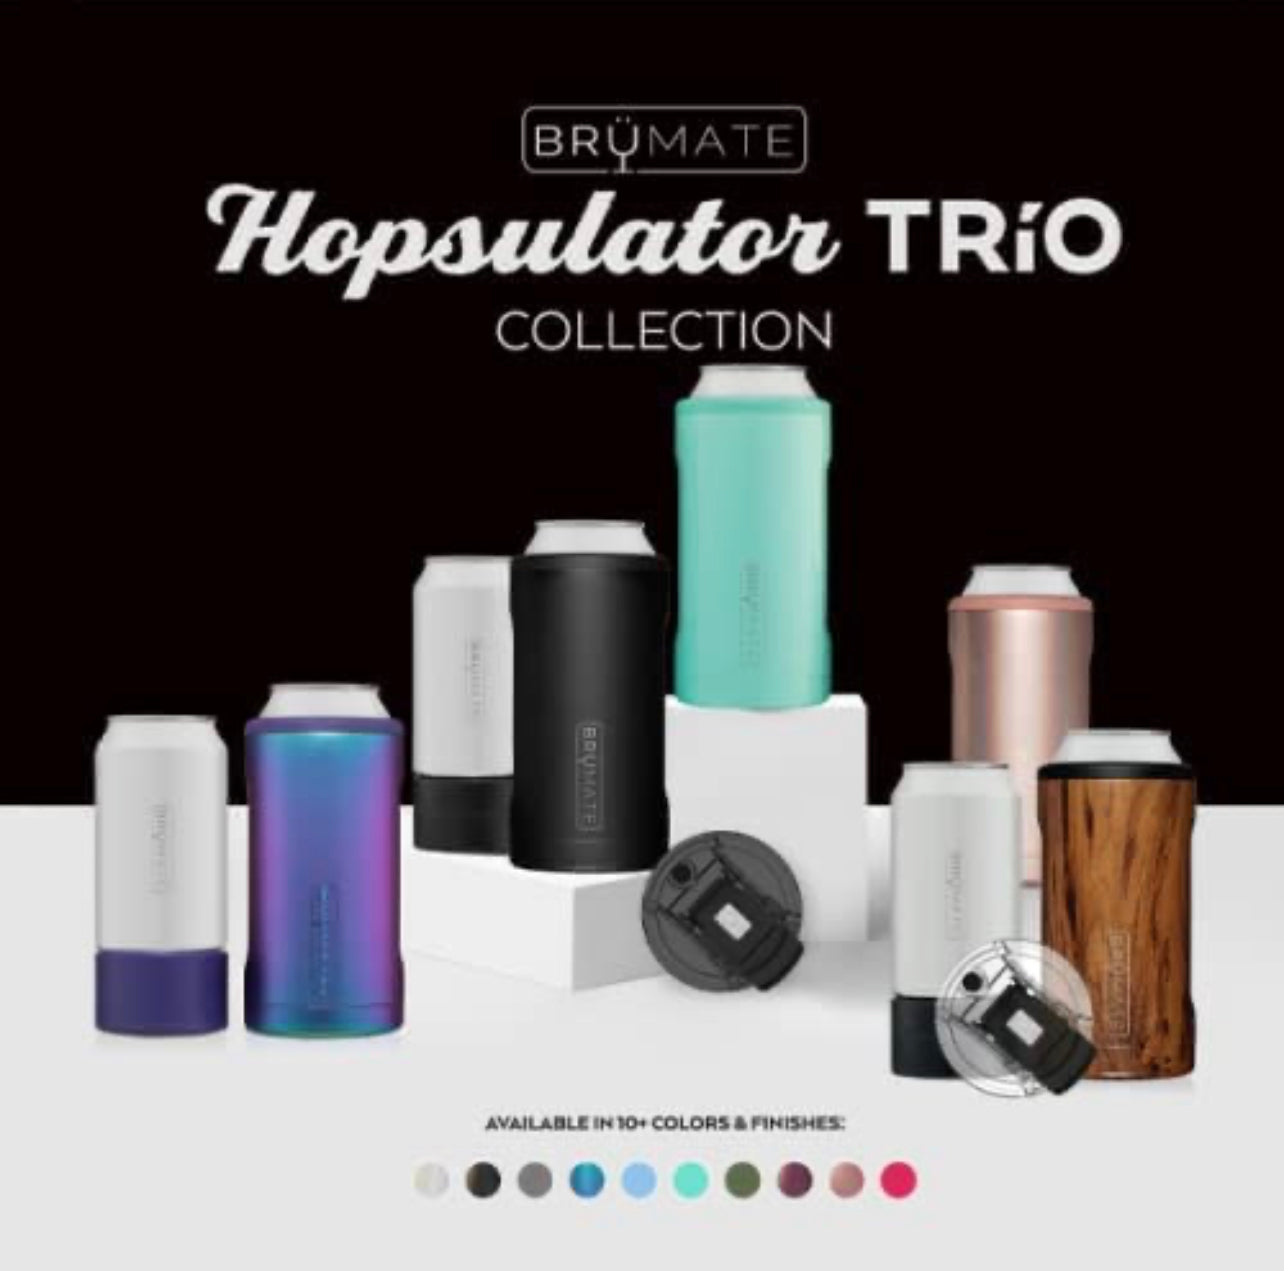 BruMate hopsulator trio 3 in 1 black stainless